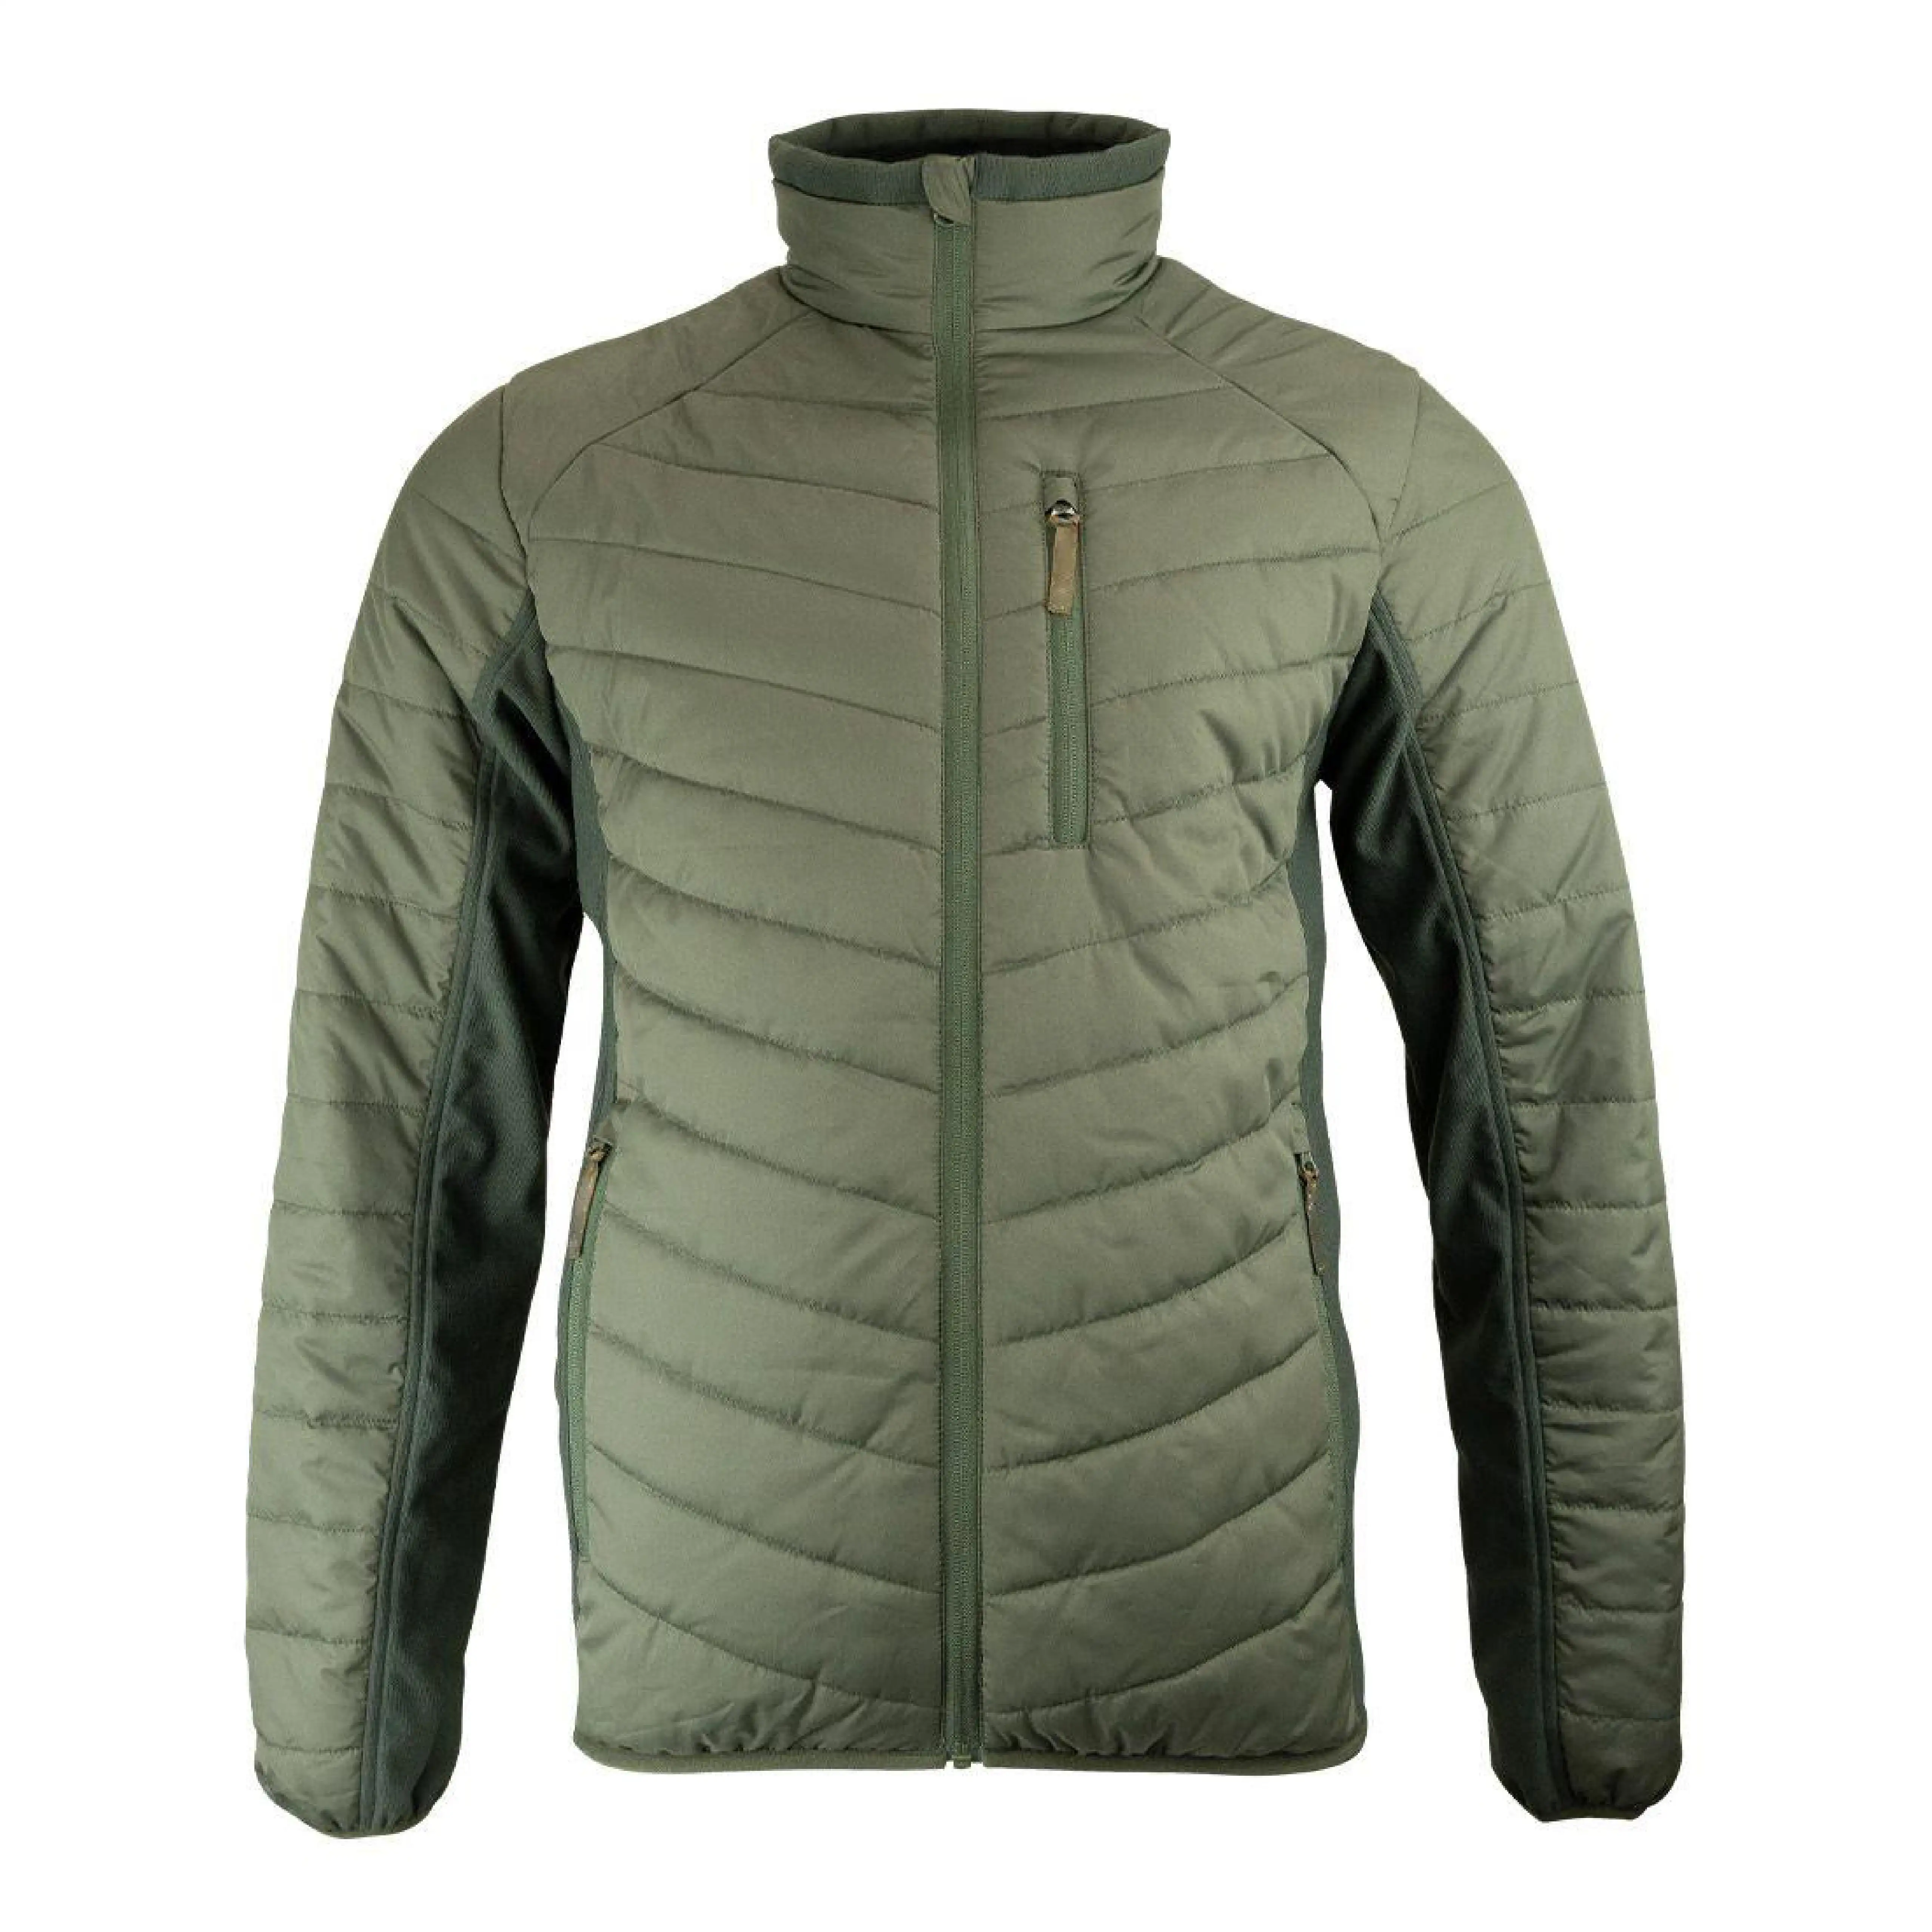 High Quality Lightweight Warm Puffer Jacket Packable Winter Down Parka Hiking Hybrid Jacket